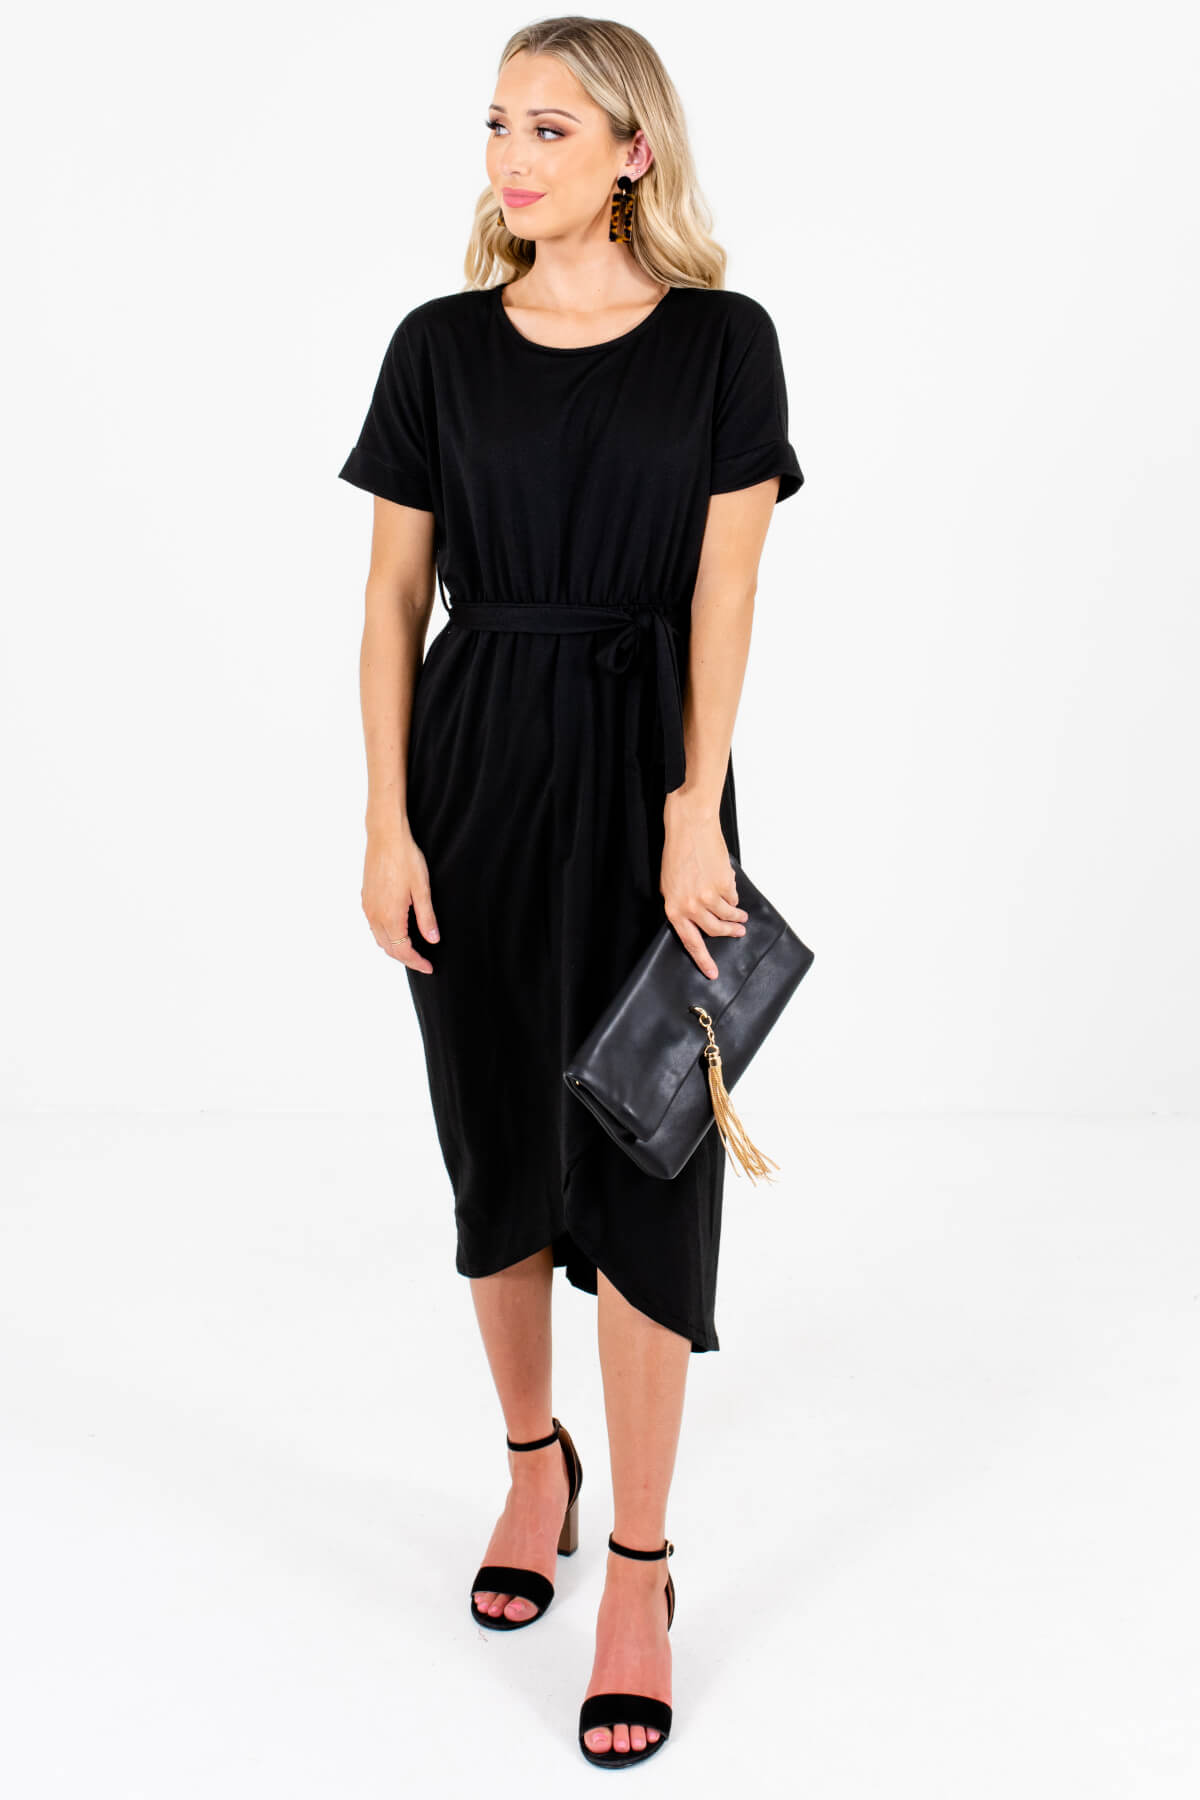 Women's Black Round Neckline Boutique Knee-Length Dress